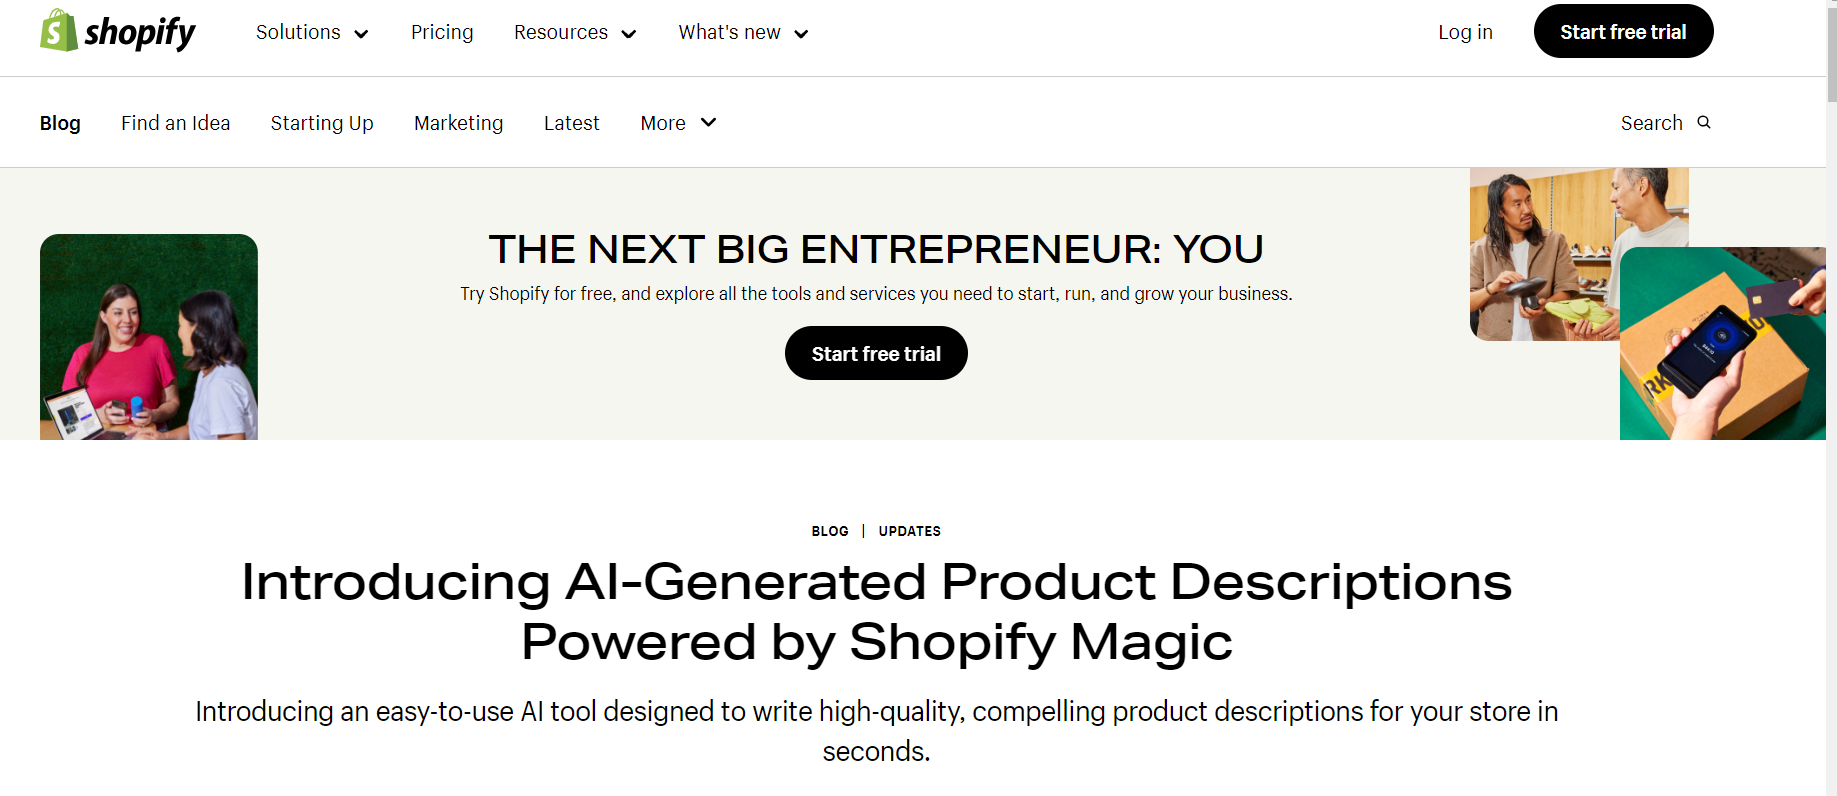 Shopify Magic uses AI for product descriptions